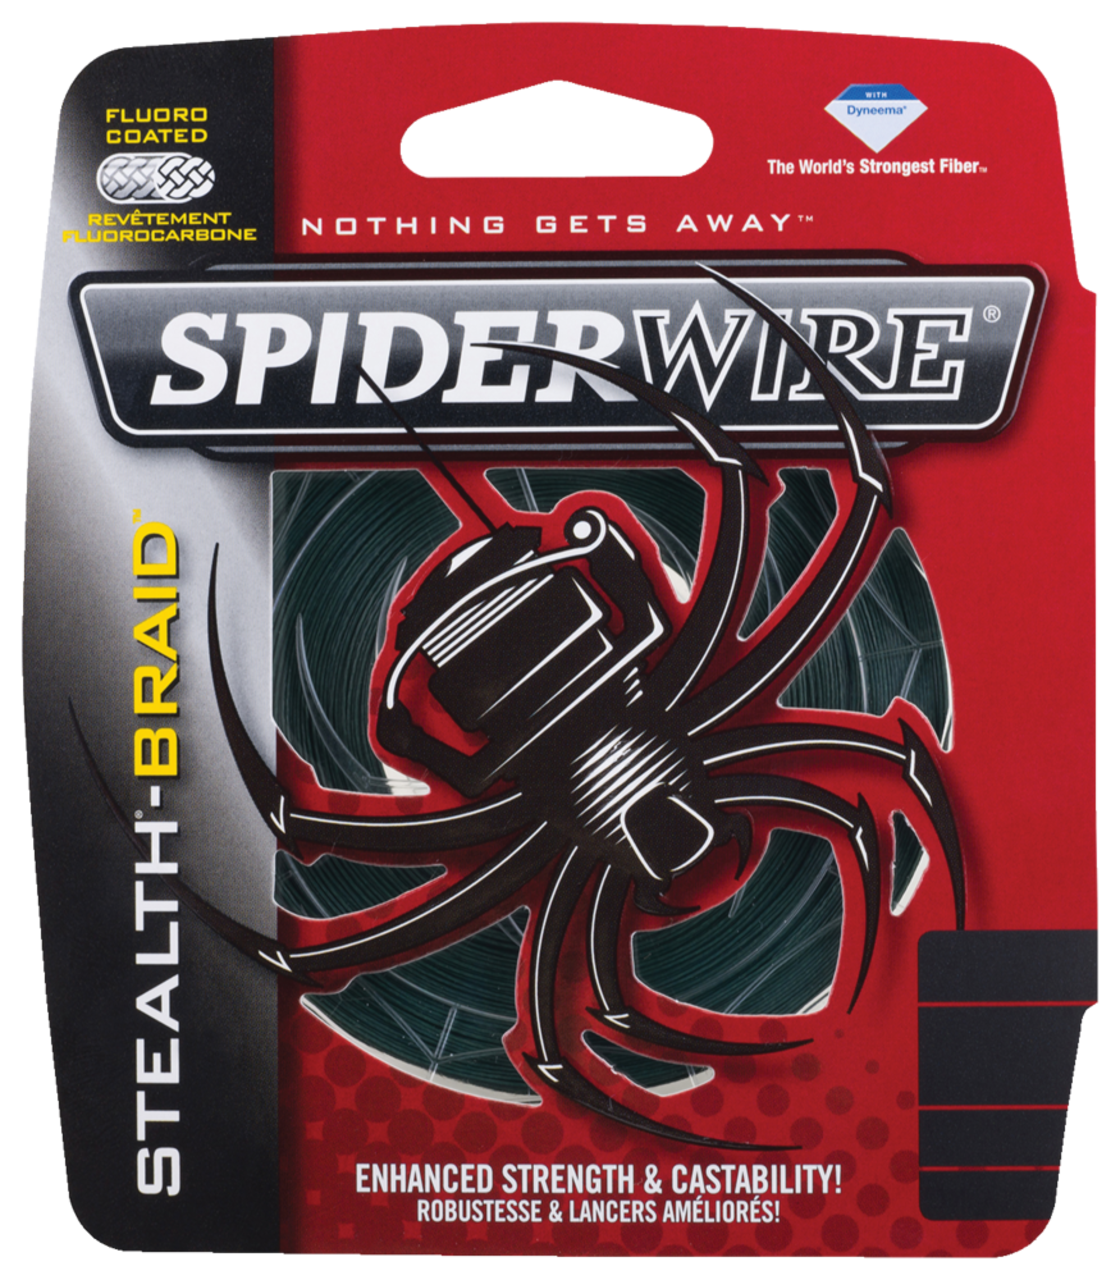 Spiderwire Stealth Smooth Braid Fishing Line - Green - 125 YD - 10lb test